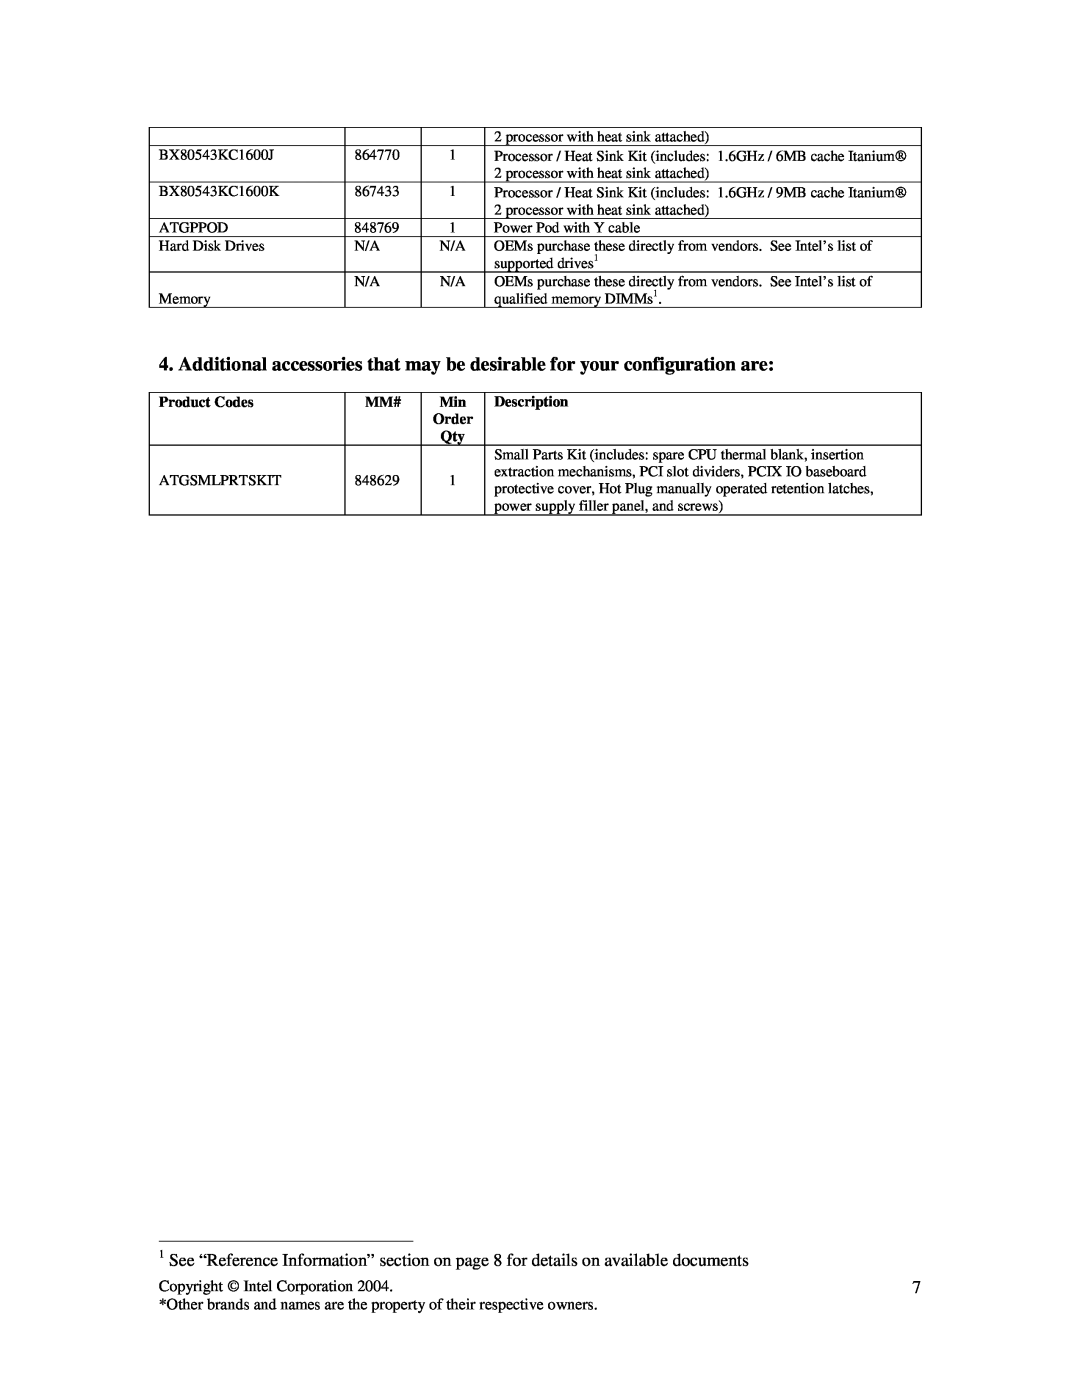 Intel SR870BN4 warranty Copyright Intel Corporation, Product Codes, Description 